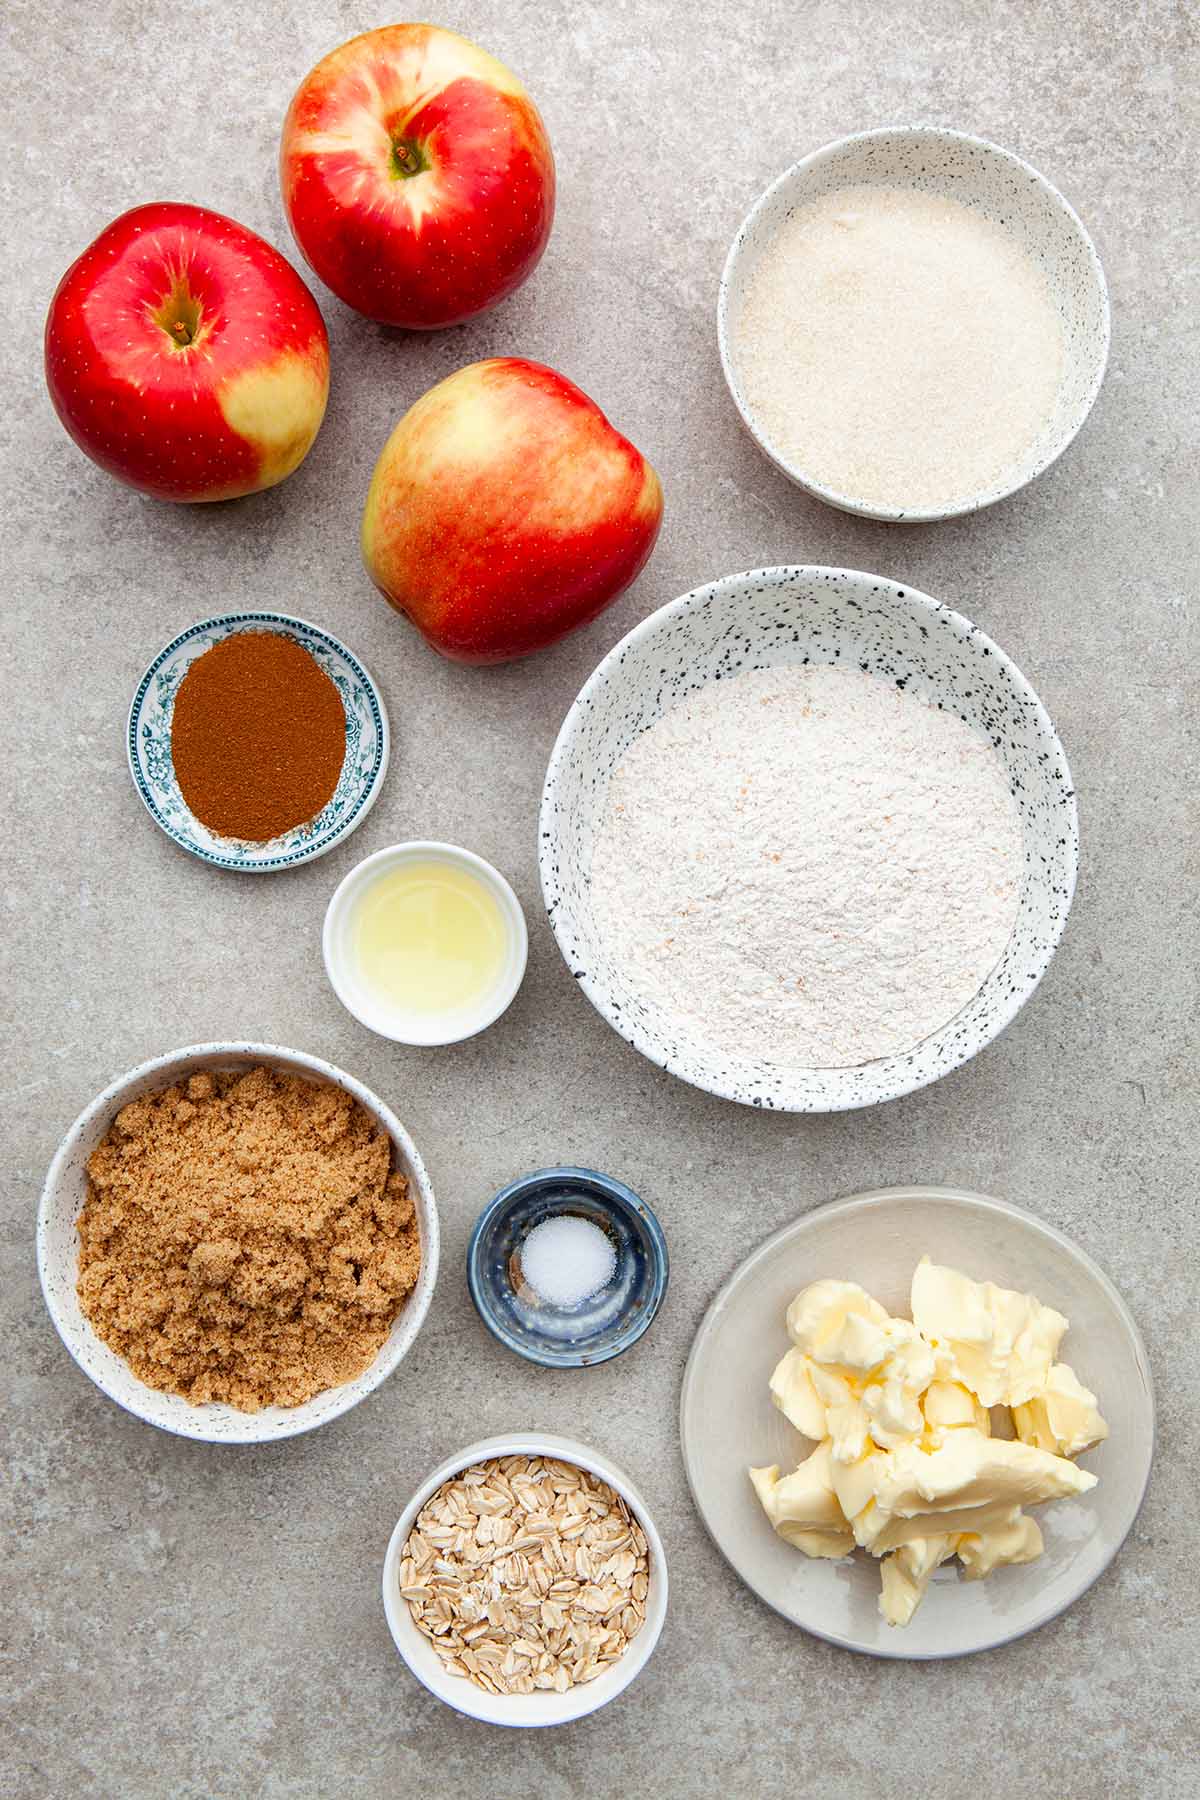 Ingredients to make Dutch oven apple crisp.